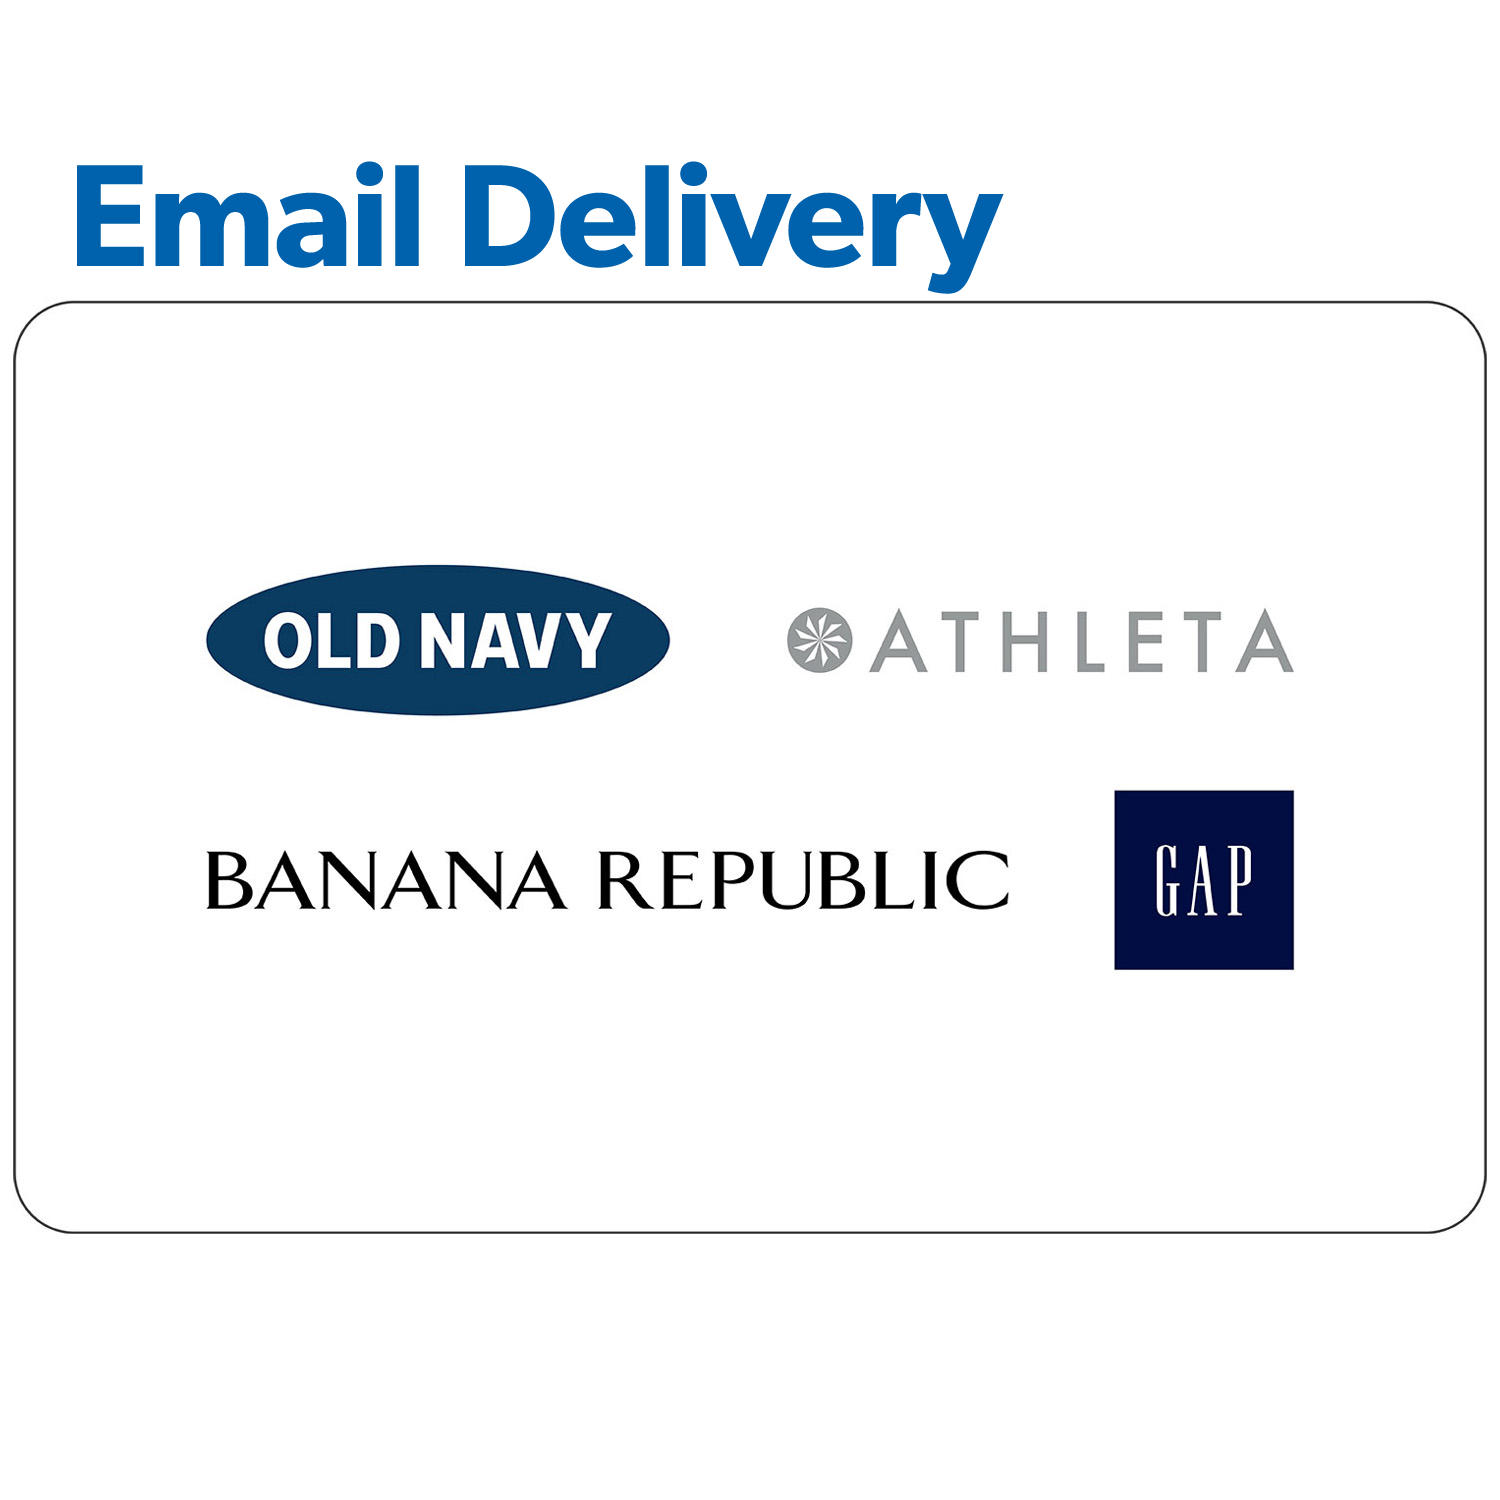 GAP Options (Gap, Old Navy, Banana Republic and, Athleta) $50 eGift Card